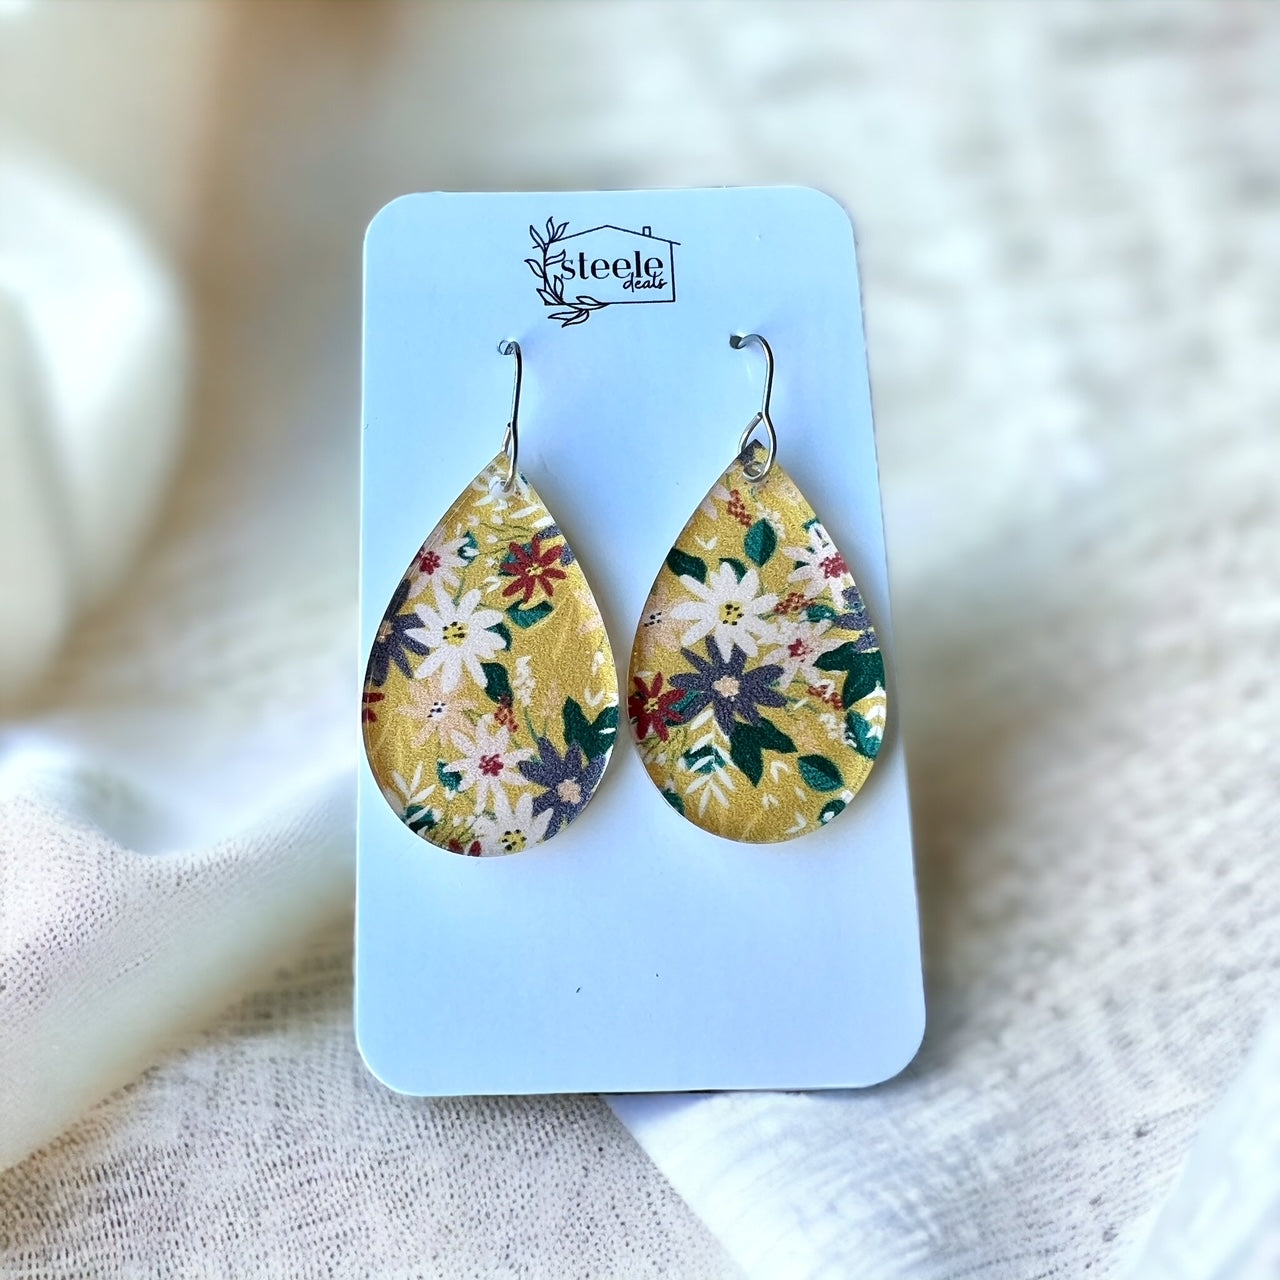 acrylic teardrop dangle earrings with a yellow floral pattern